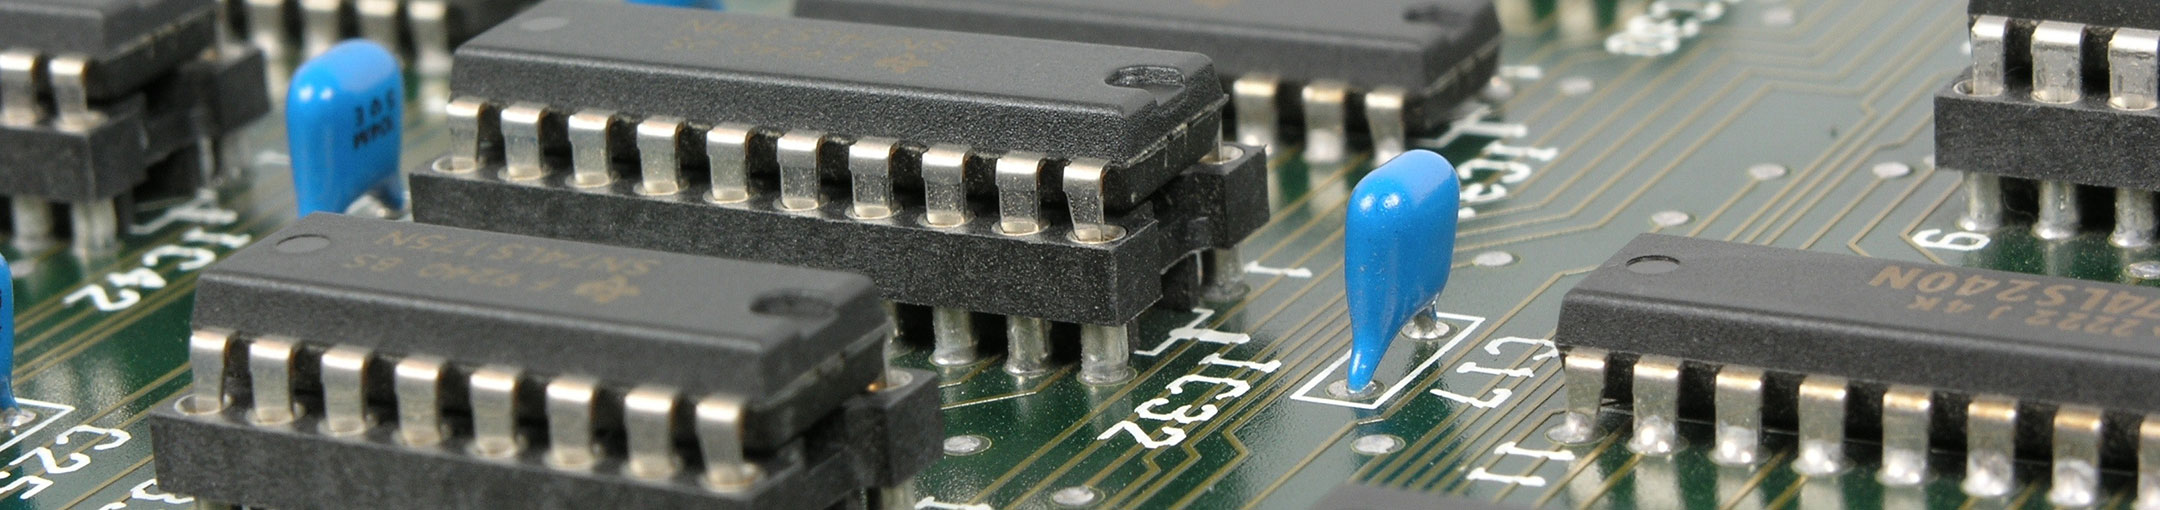 a closeup of a circuit board